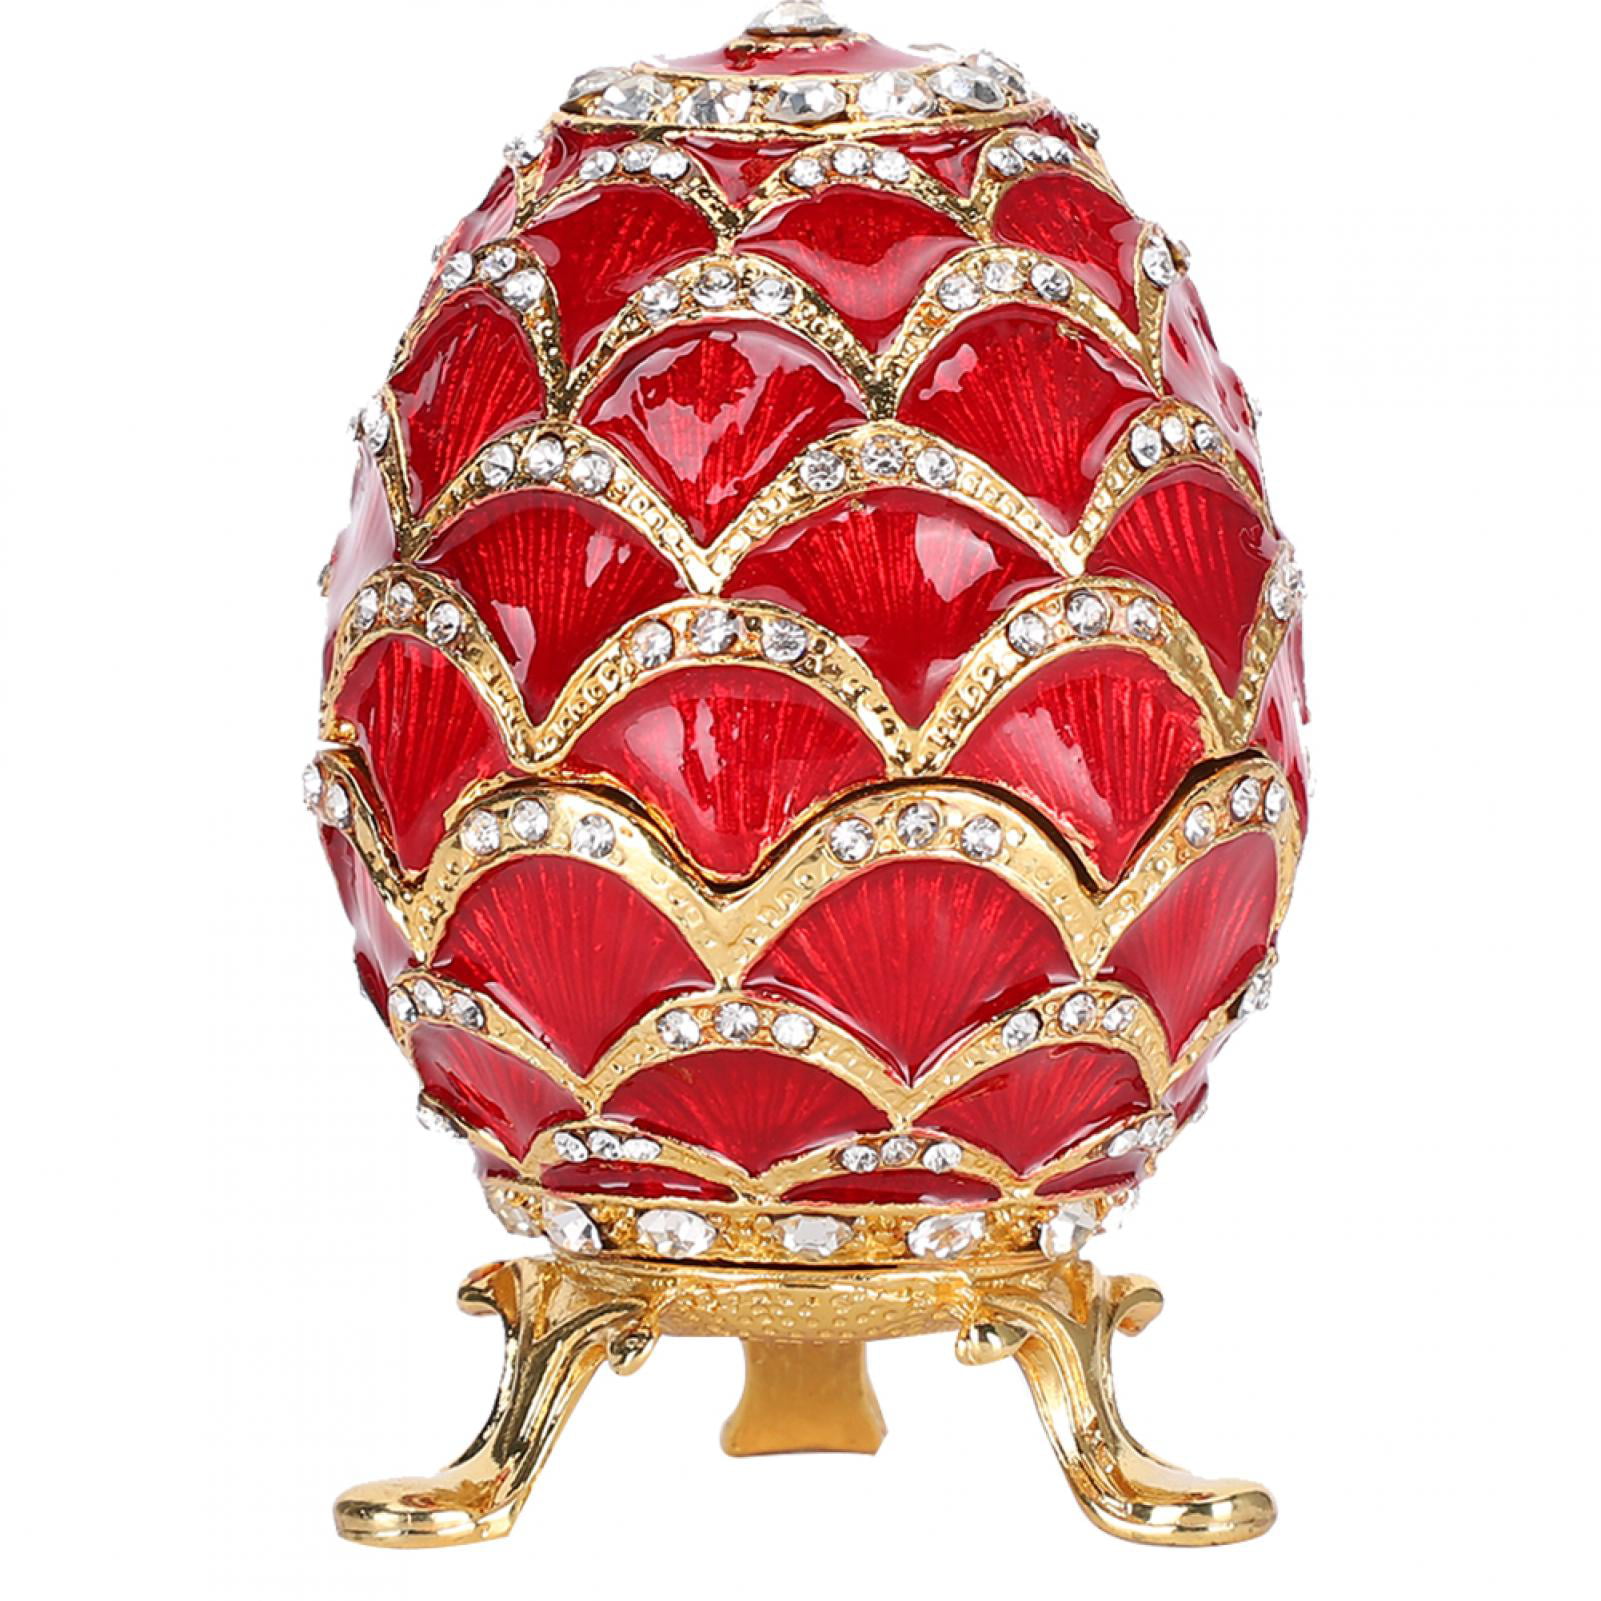 Enameled Eggs Easter Egg Crafts Gilded Enamel Painted Metal Ornaments Home Decor